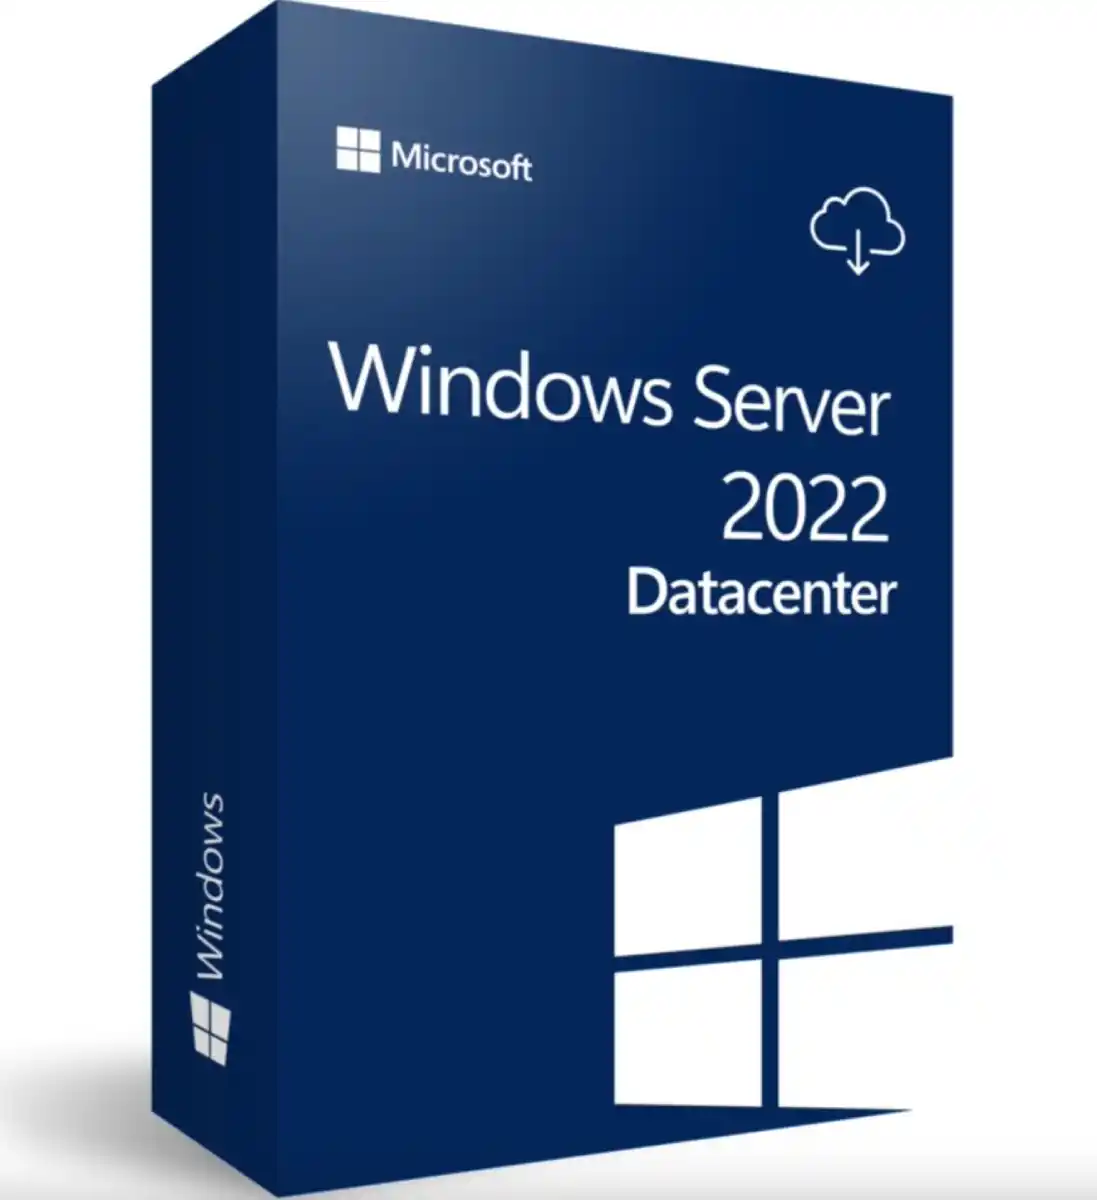 Windows server 2022 datacenter download biology workbook for dummies pdf download